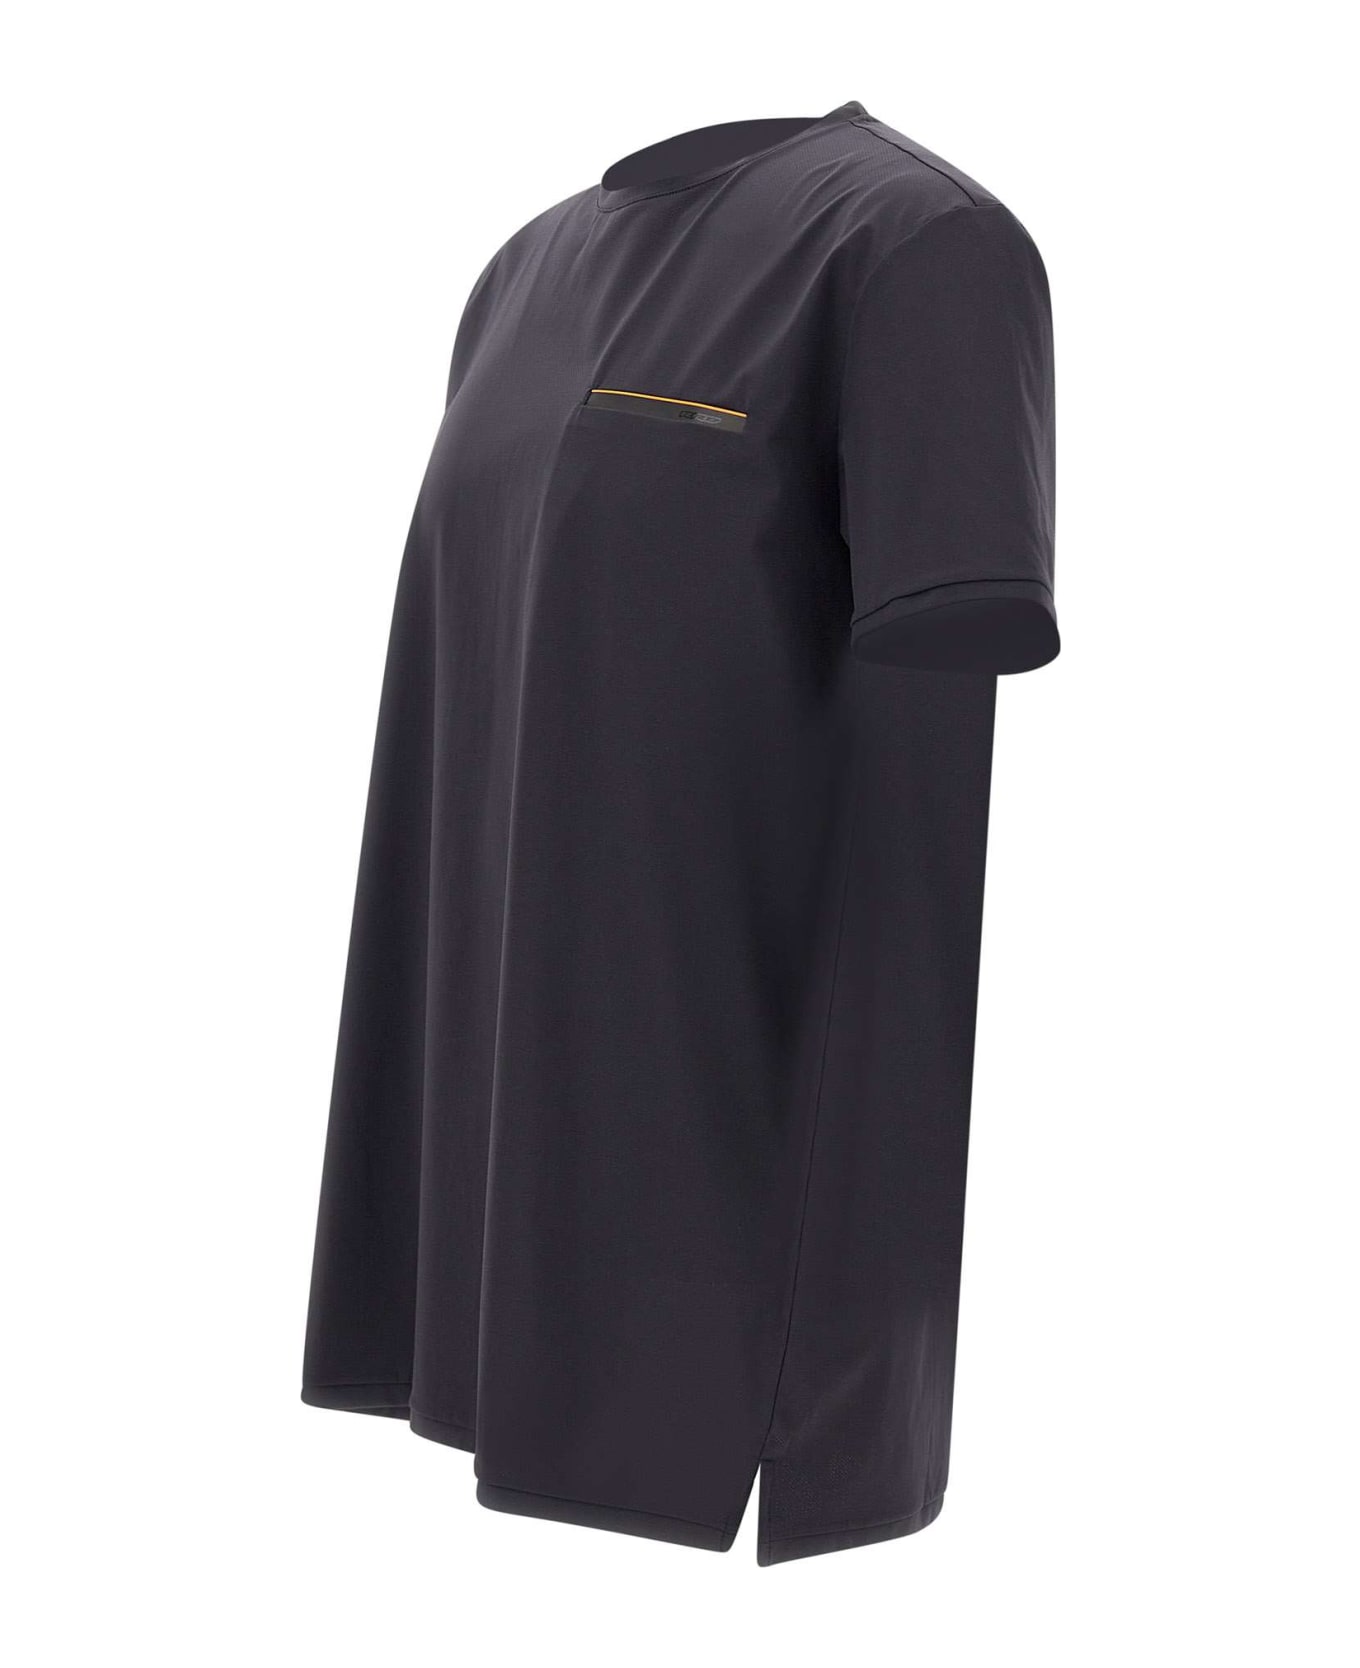 RRD - Roberto Ricci Design "oxford Pocket Shirty" T-shirt - BLACK